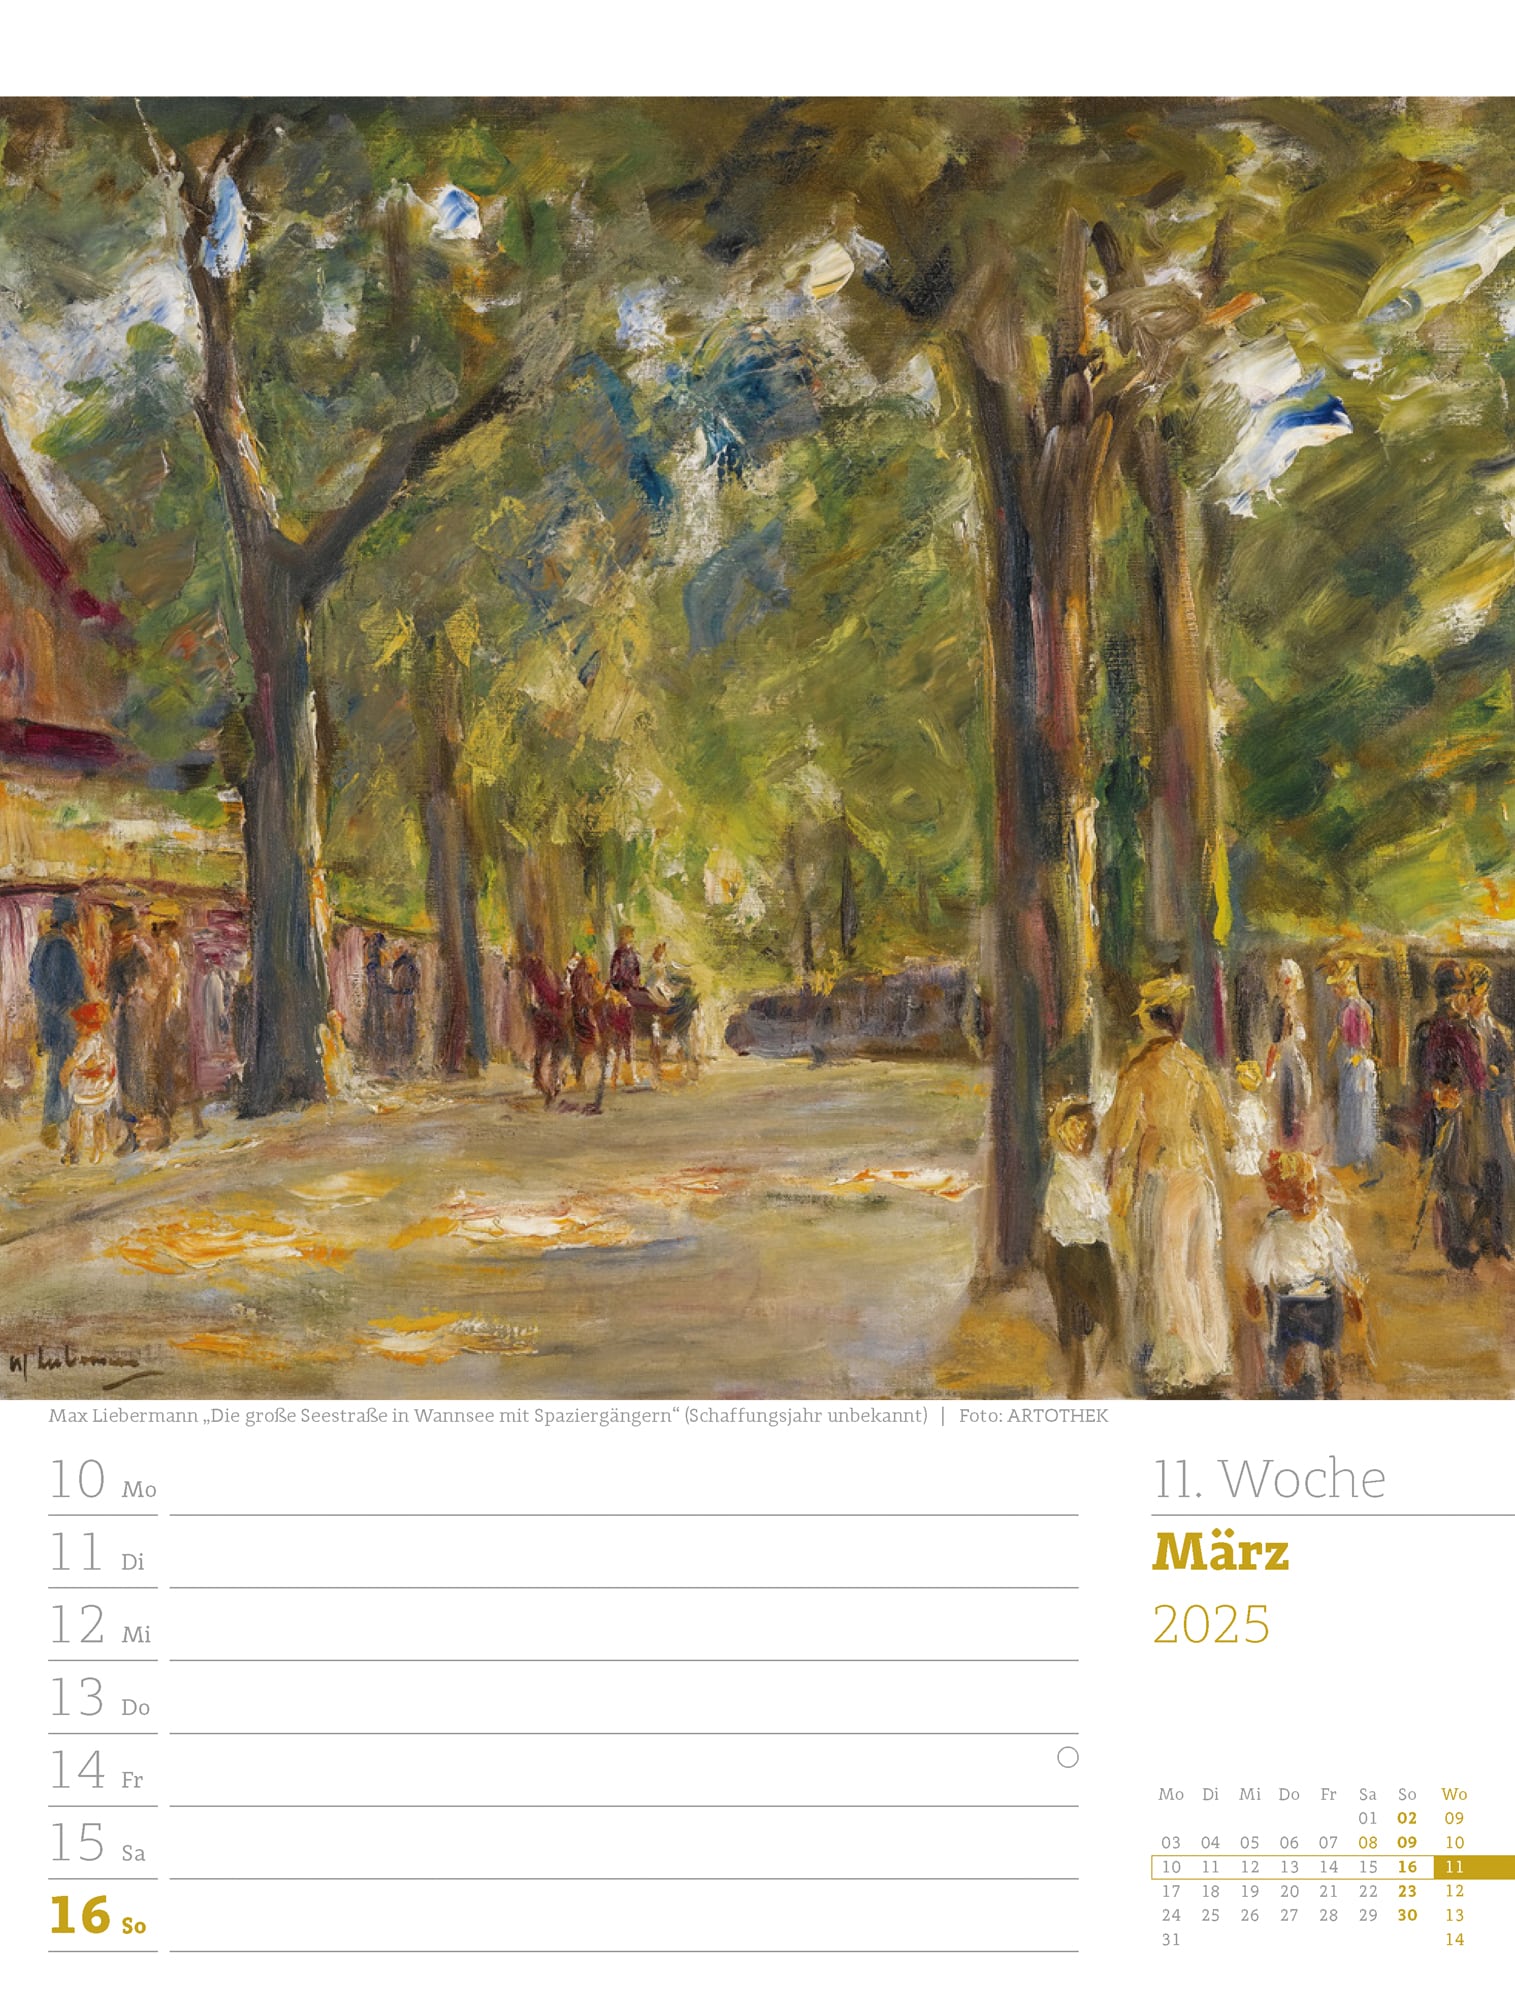 Ackermann Calendar World of Art 2025 - Weekly Planner - Inside View 14